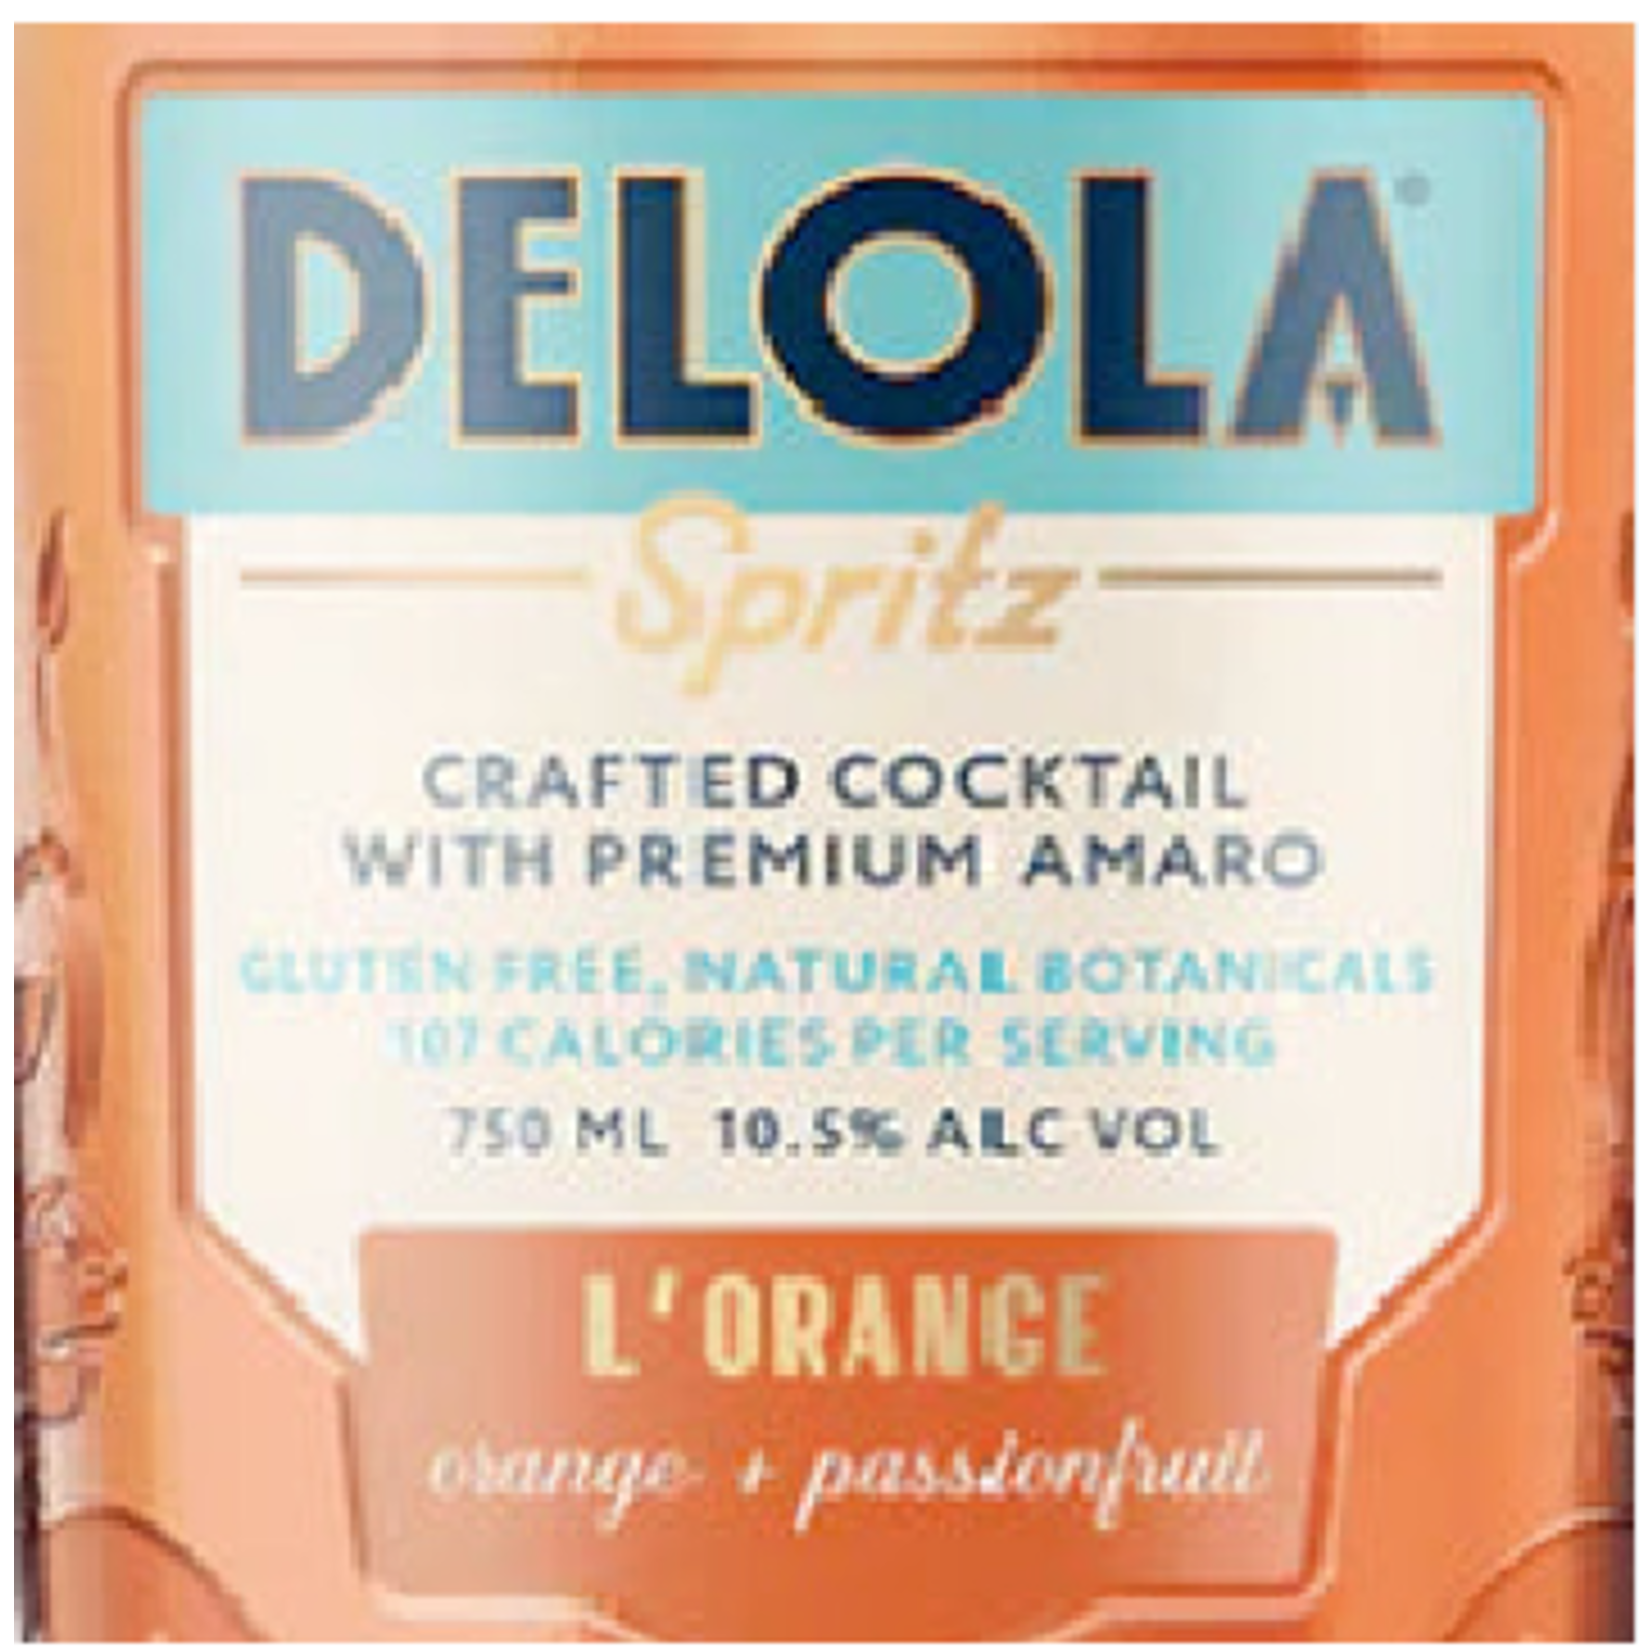 DeLola DeLola Spritz L'Orange Crafted Cocktail